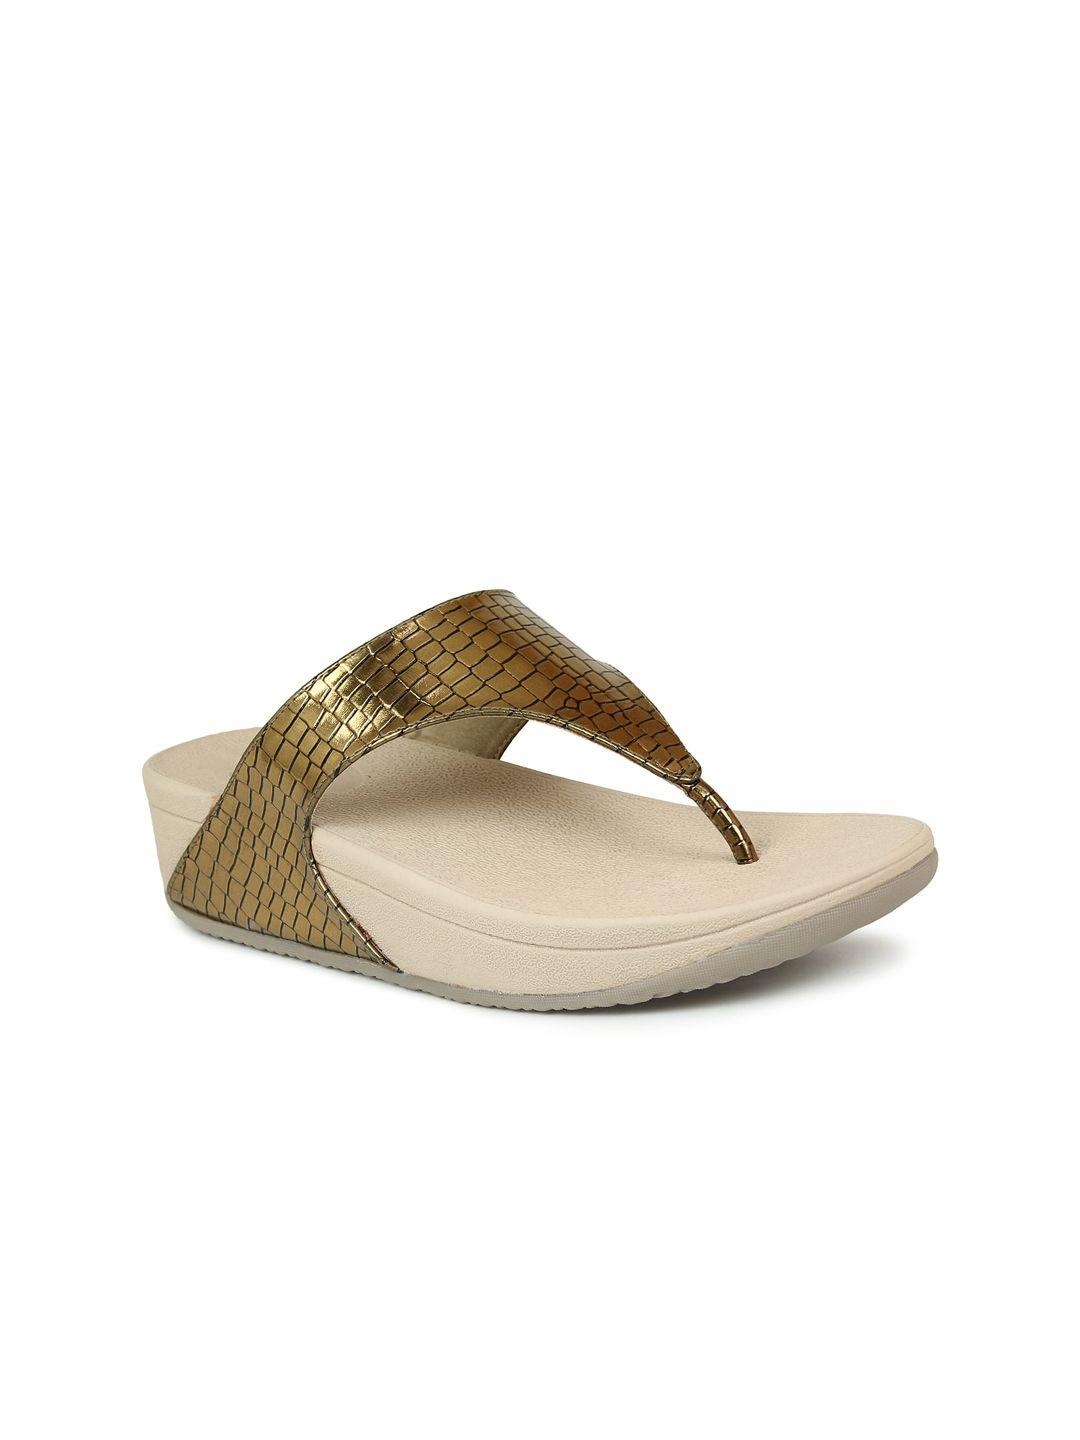 inc 5 gold-toned & beige textured ethnic wedge sandals